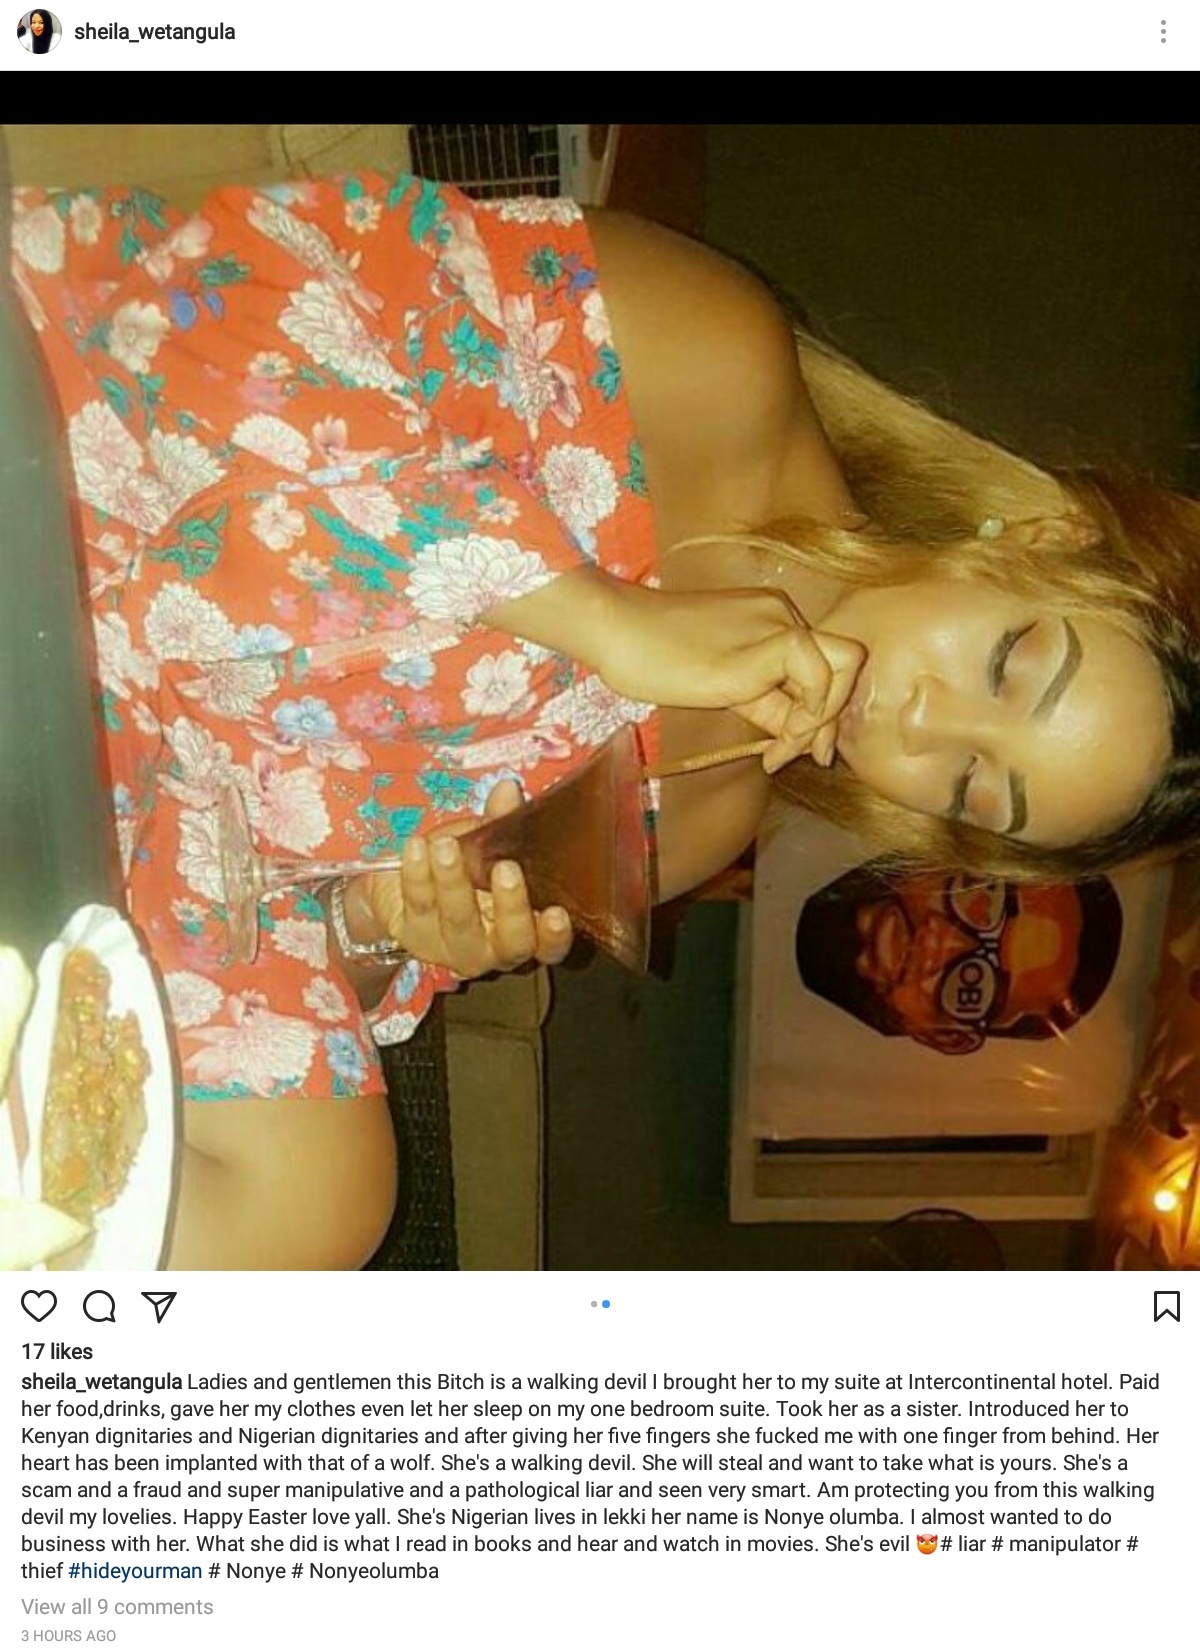 Kenyan Lady Has Taken To Instagram To Shame Her Nigerian Friend Nonye Olumba For Stealing From Her Despite Introducing Her To Kenyan And Nigerian Dignitaries 3